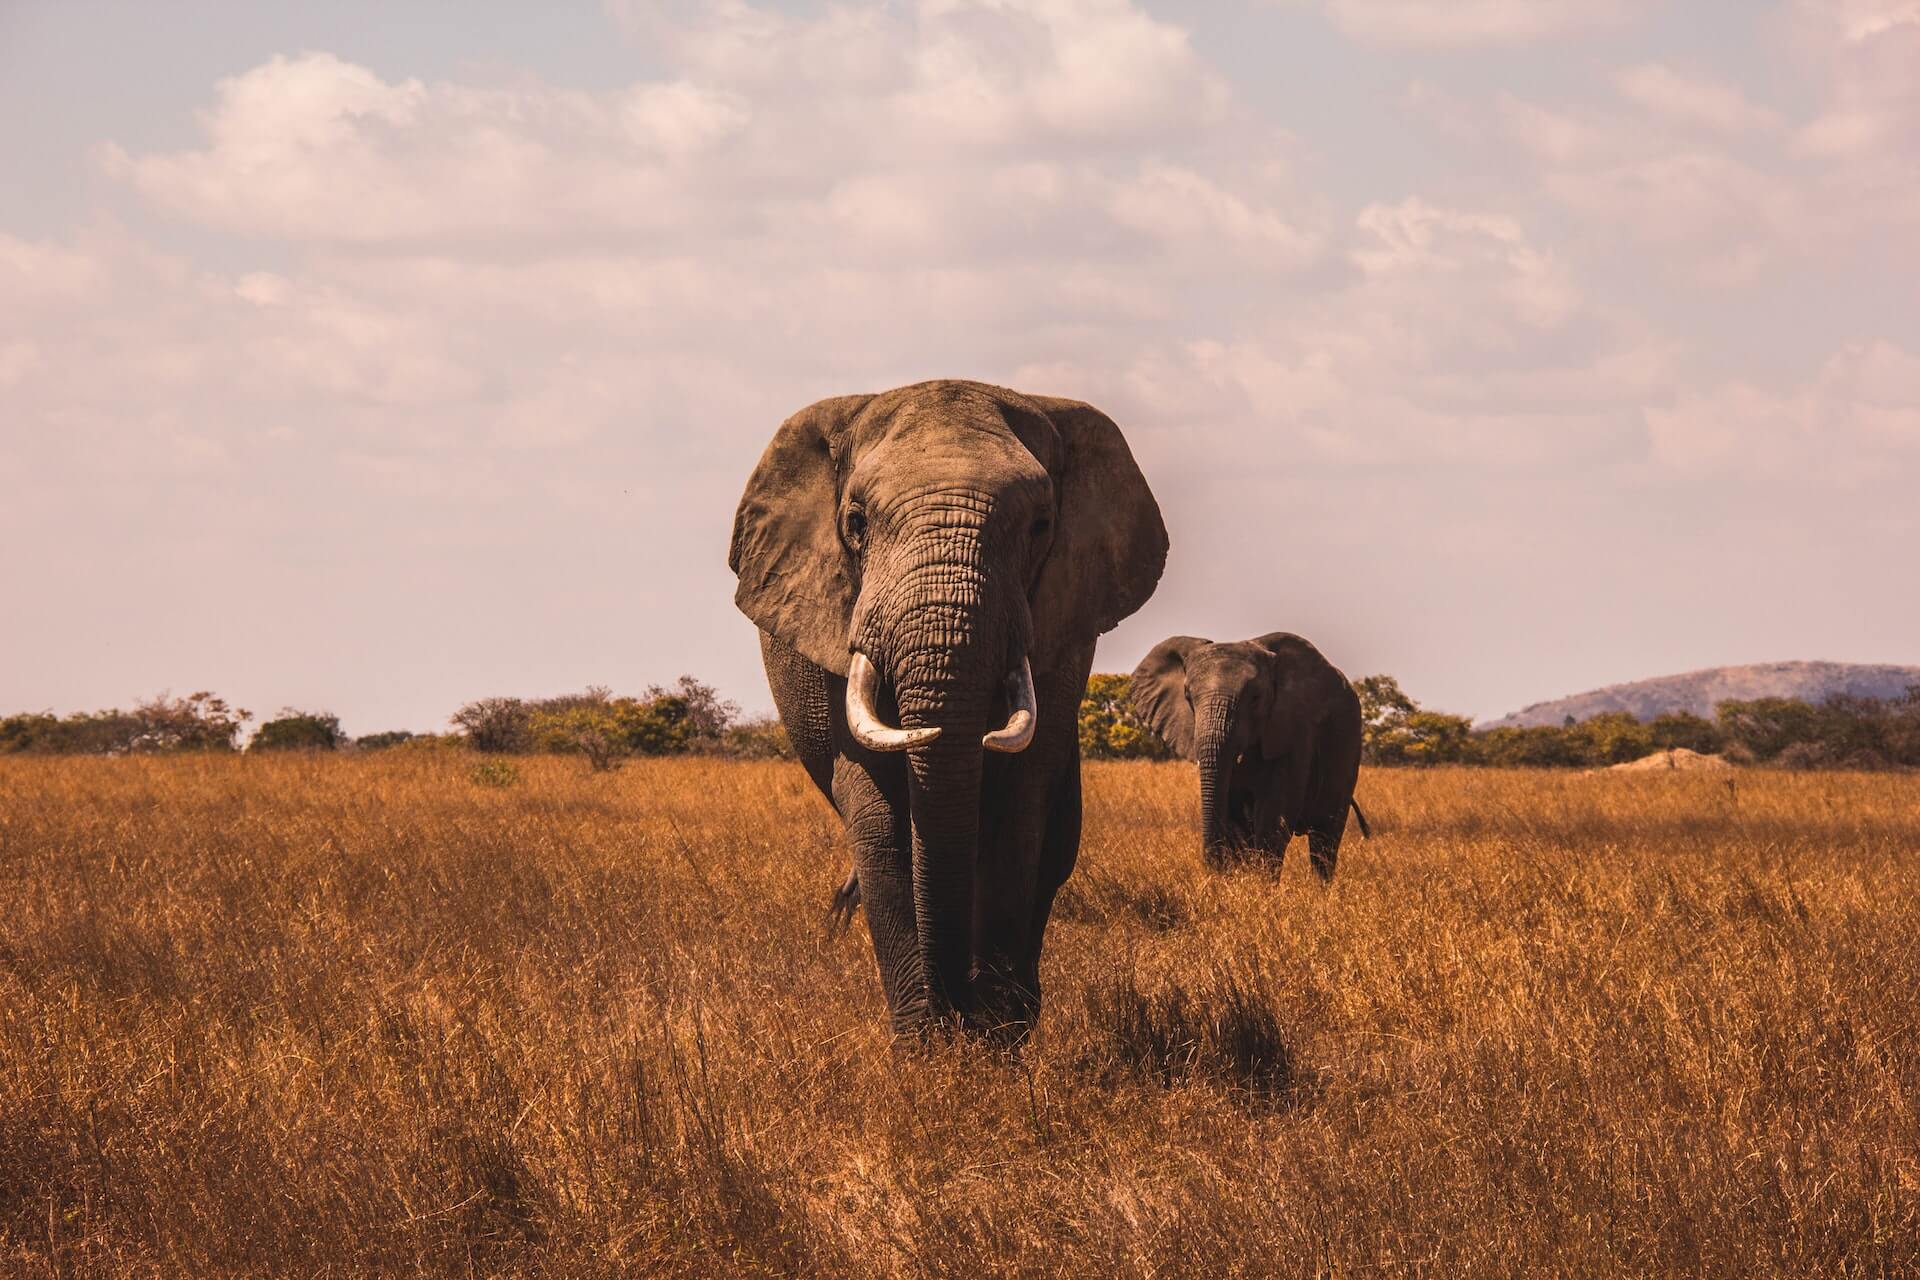 A large elephant in Amboseli, Kenya